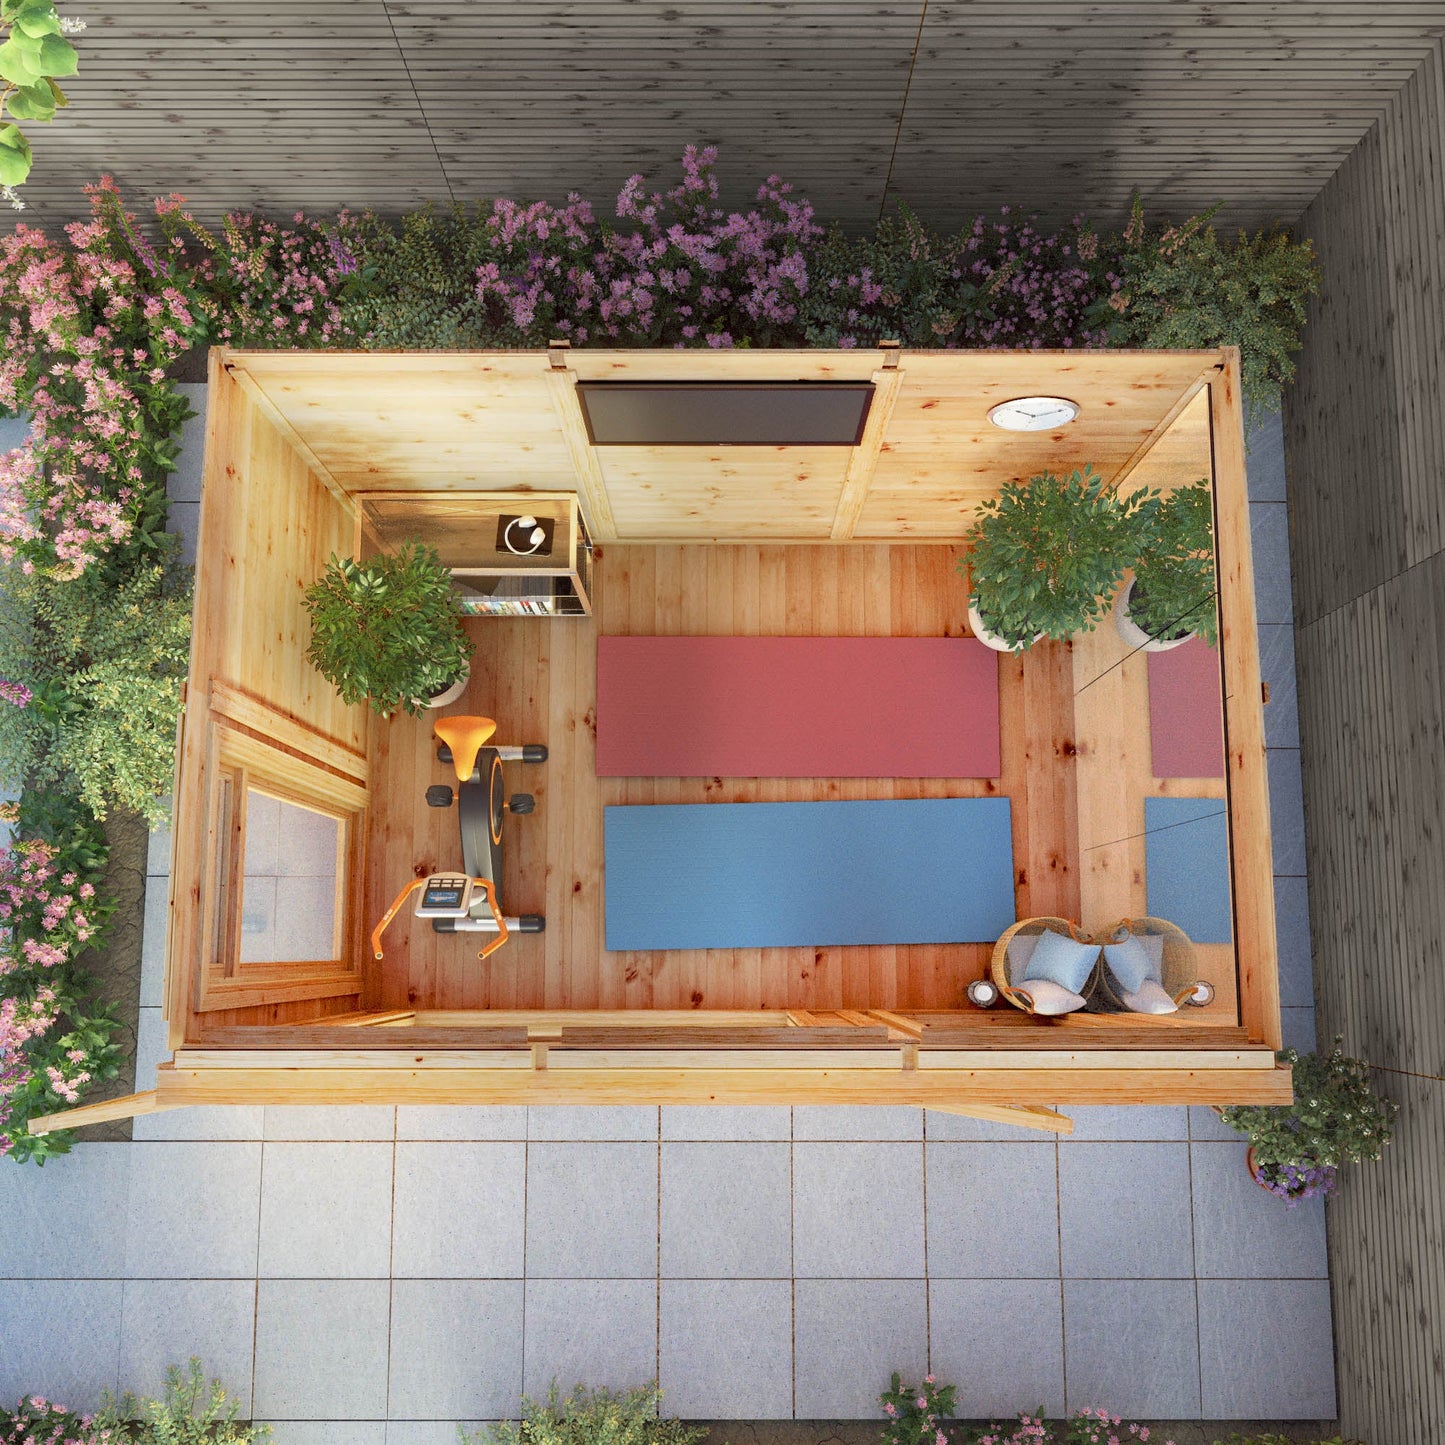 3 x 2m DIY Insulated Garden Room